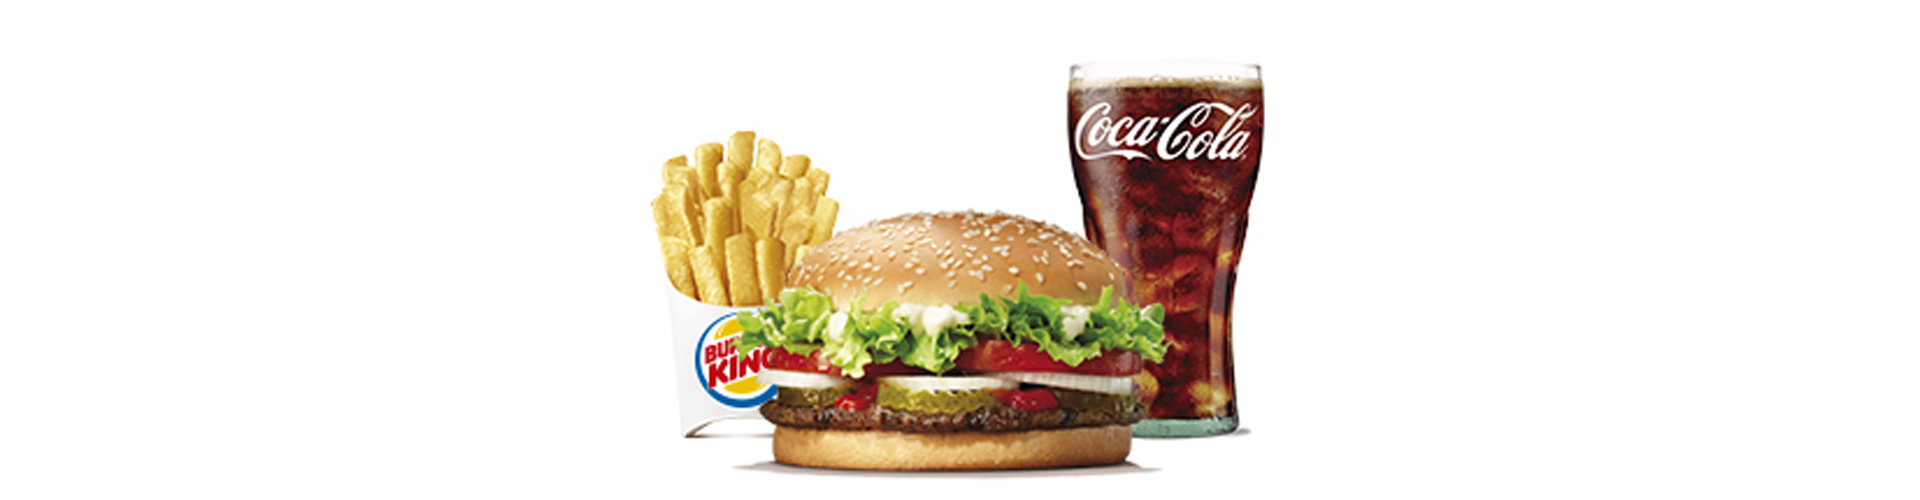 burgerking-40001707-cocacola-zero-ensalada